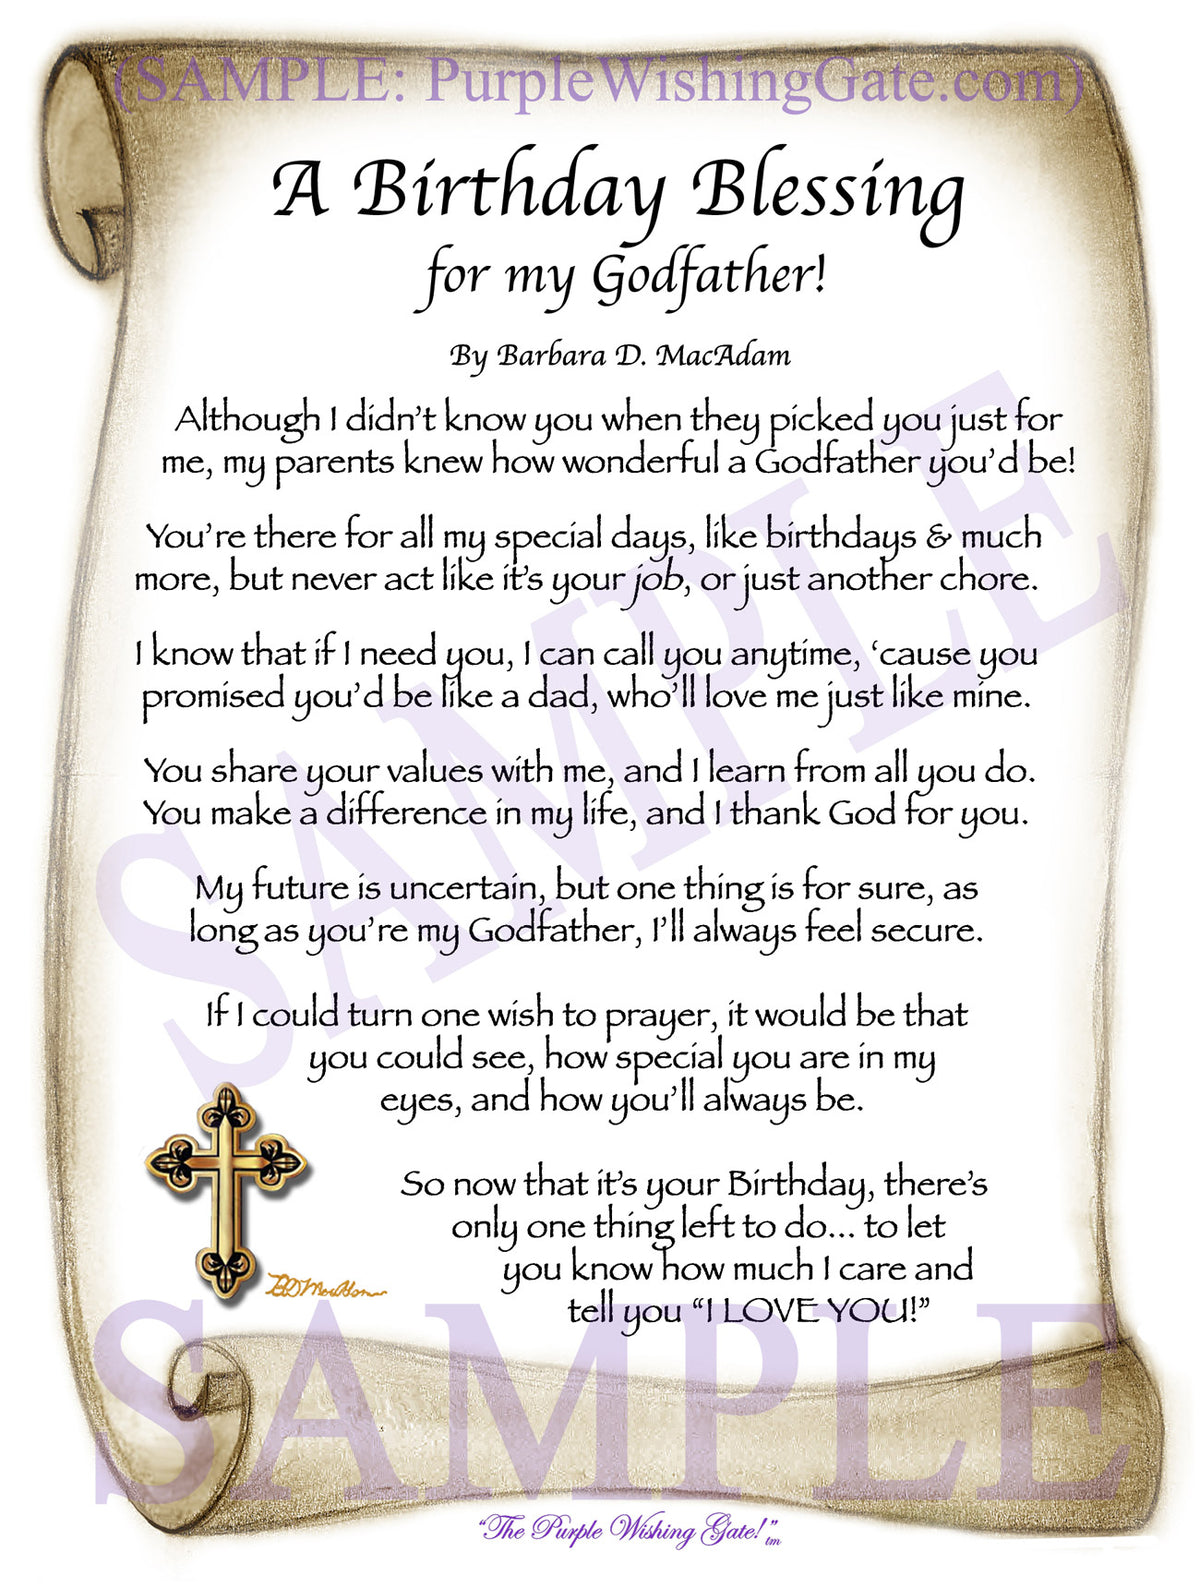 Birthday Gift For Godfather Personalized Blessing Purplewishinggate Purplewishinggate Com